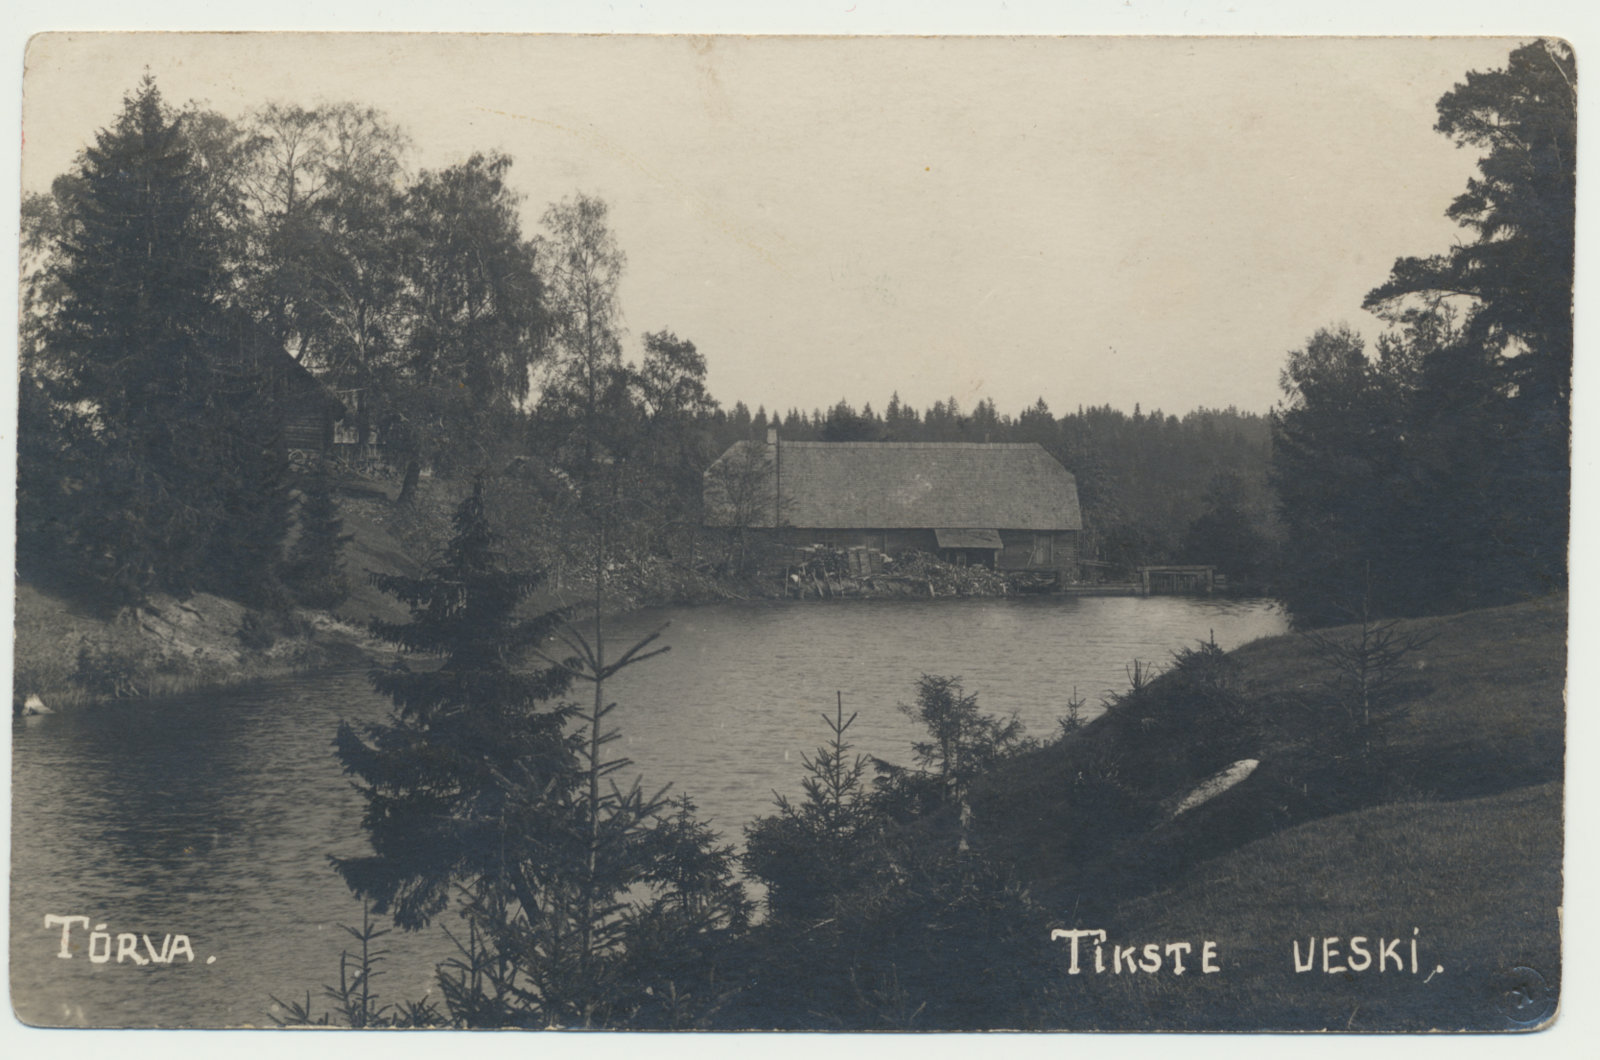 foto, Helme khk, Tõrva, Tikste veski, u 1920